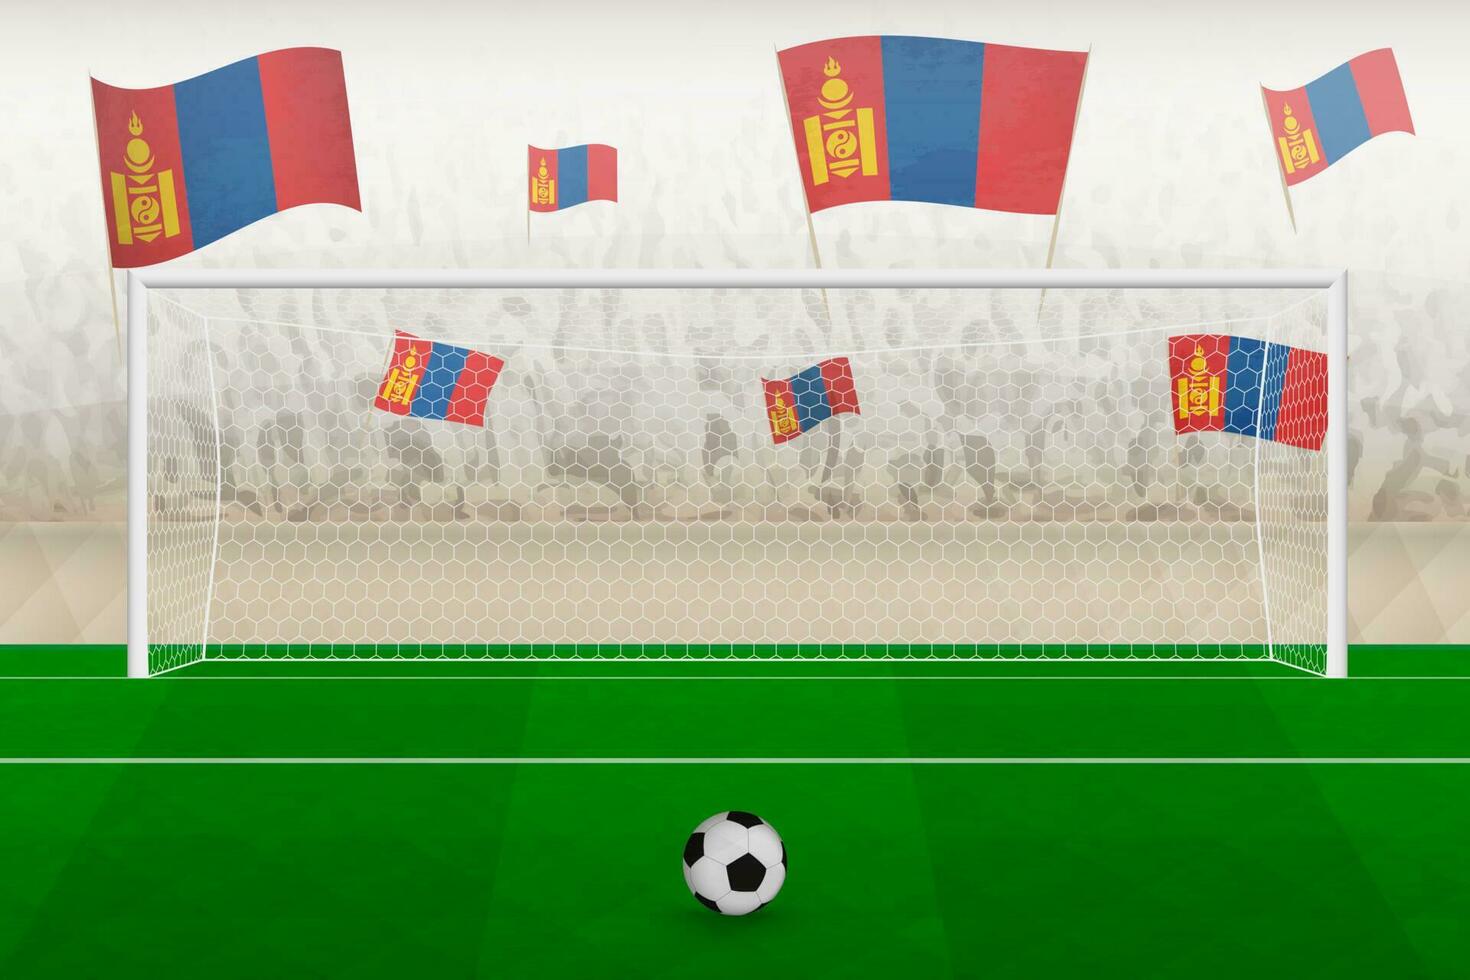 Mongolia fútbol americano equipo aficionados con banderas de Mongolia aplausos en estadio, multa patada concepto en un fútbol fósforo. vector